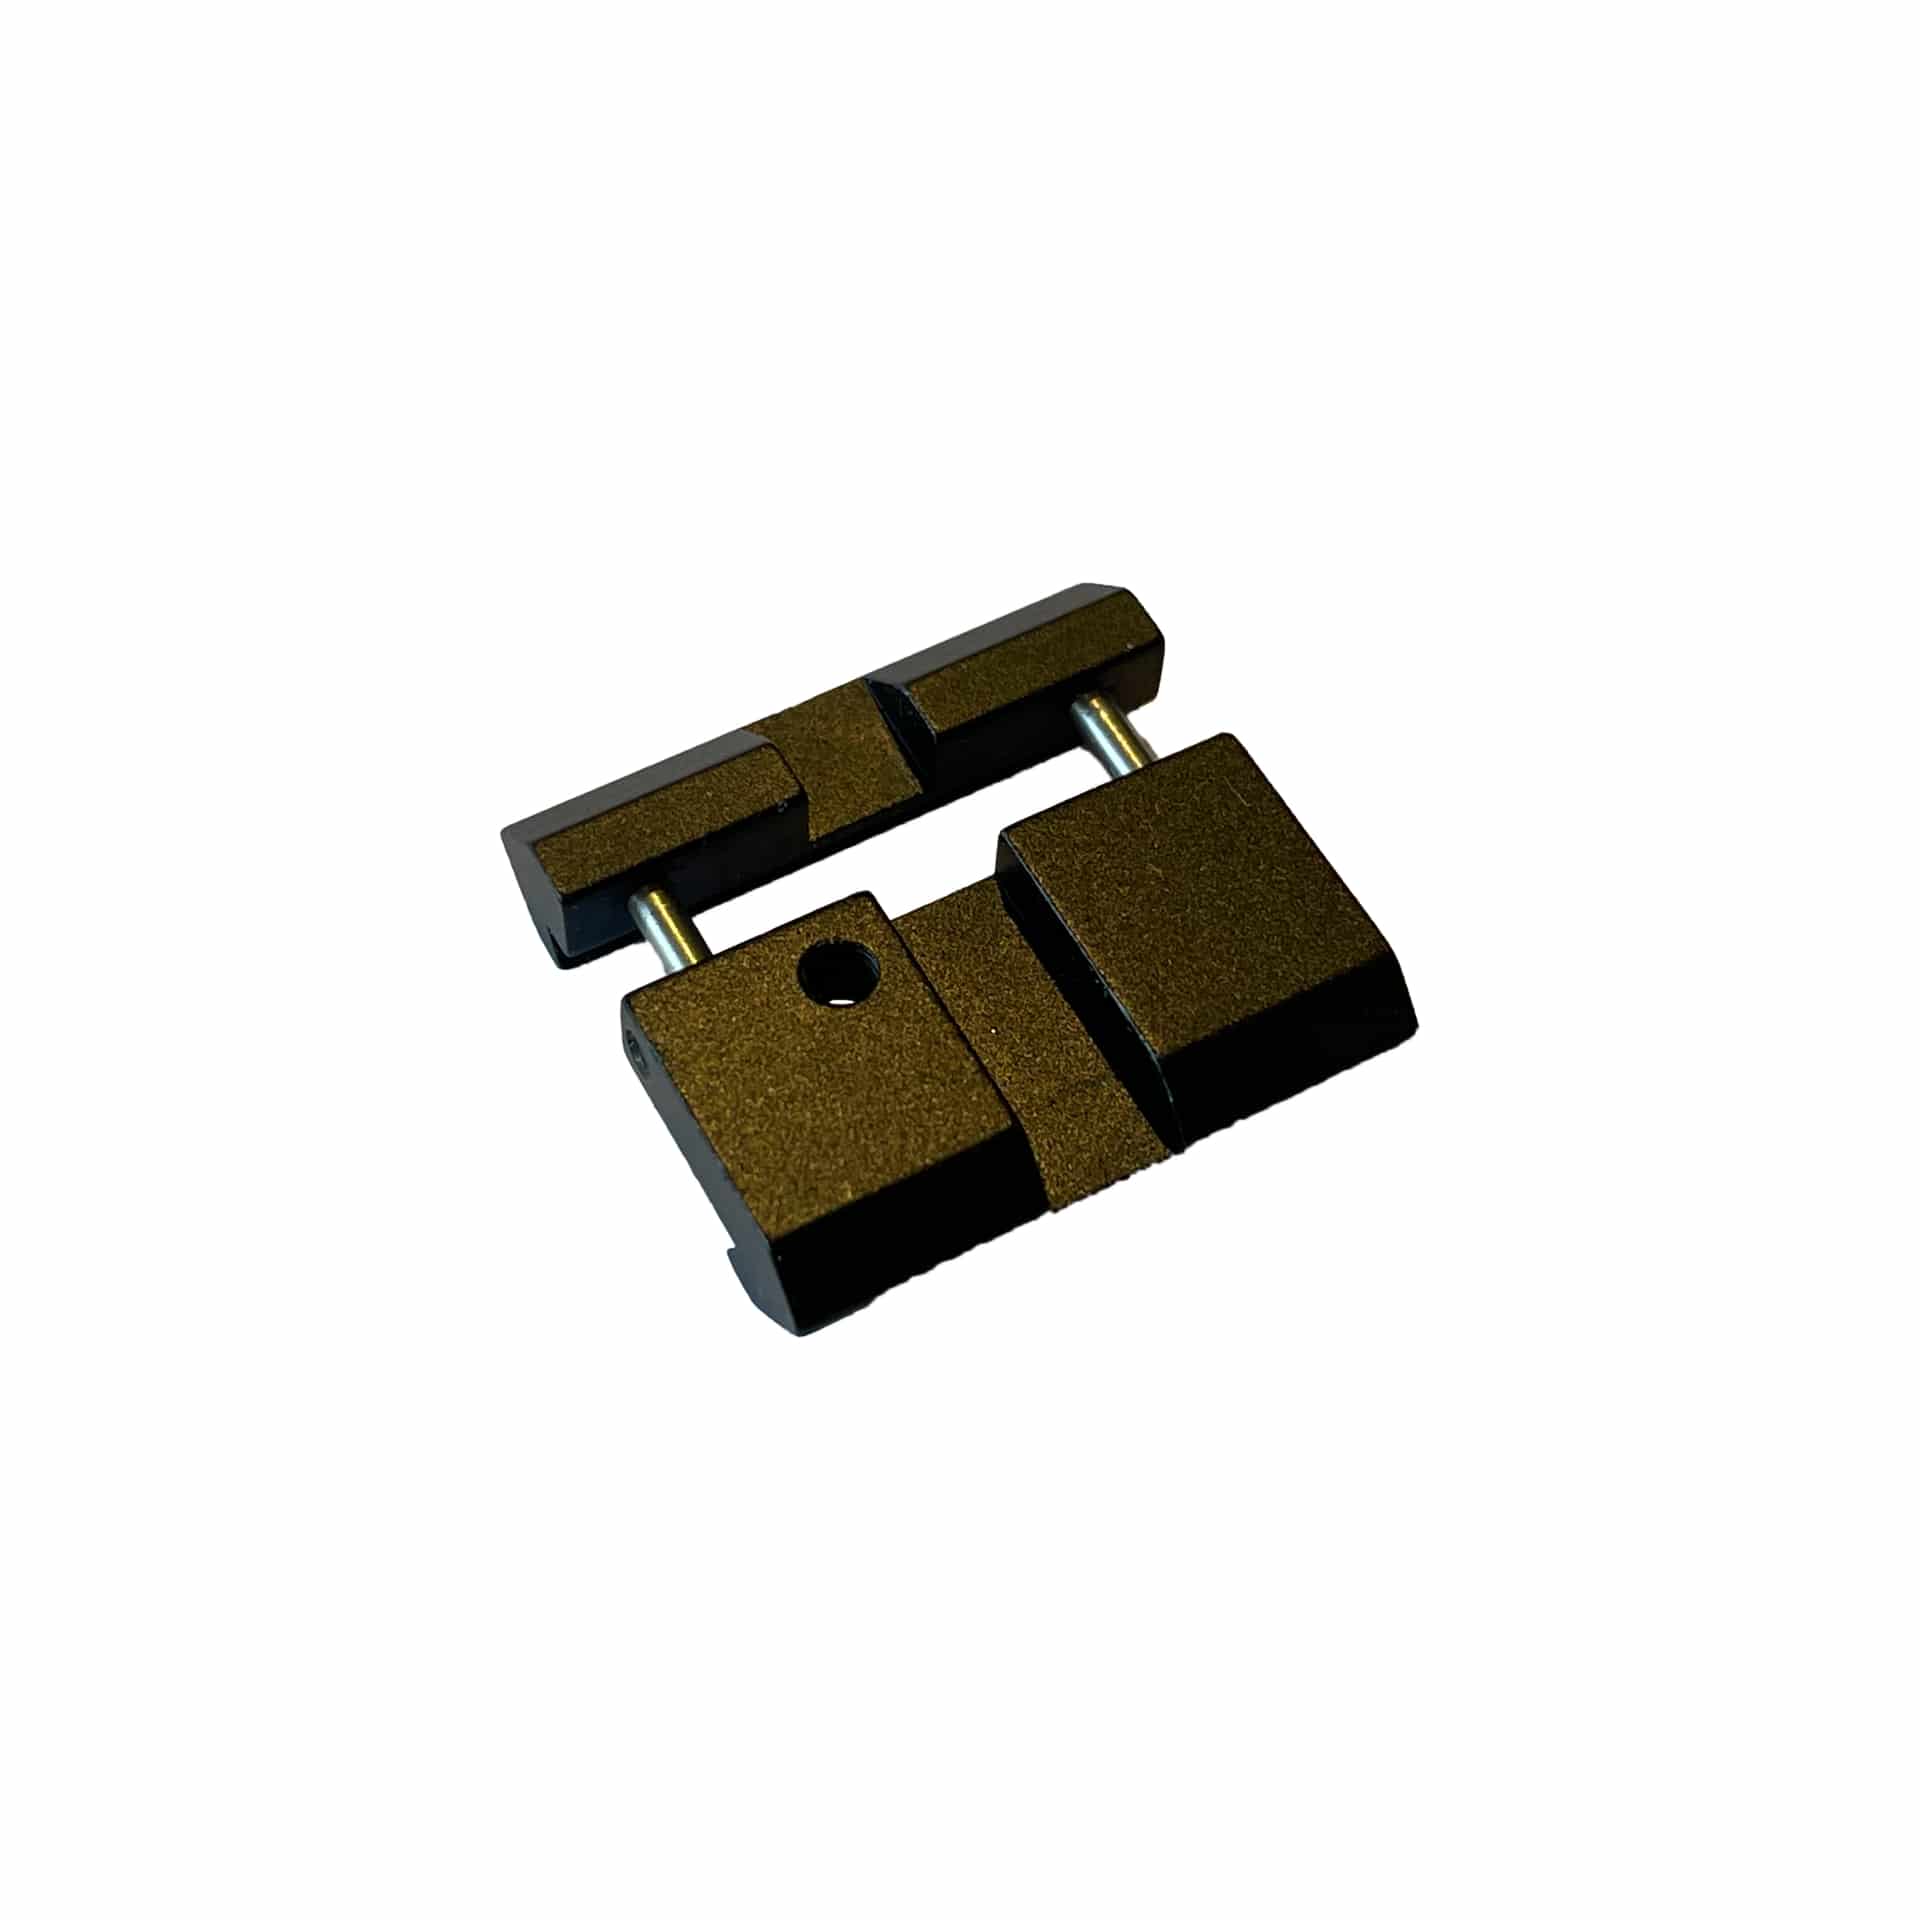 UTG-1 adapter 11mm to Picatinny/Weaver